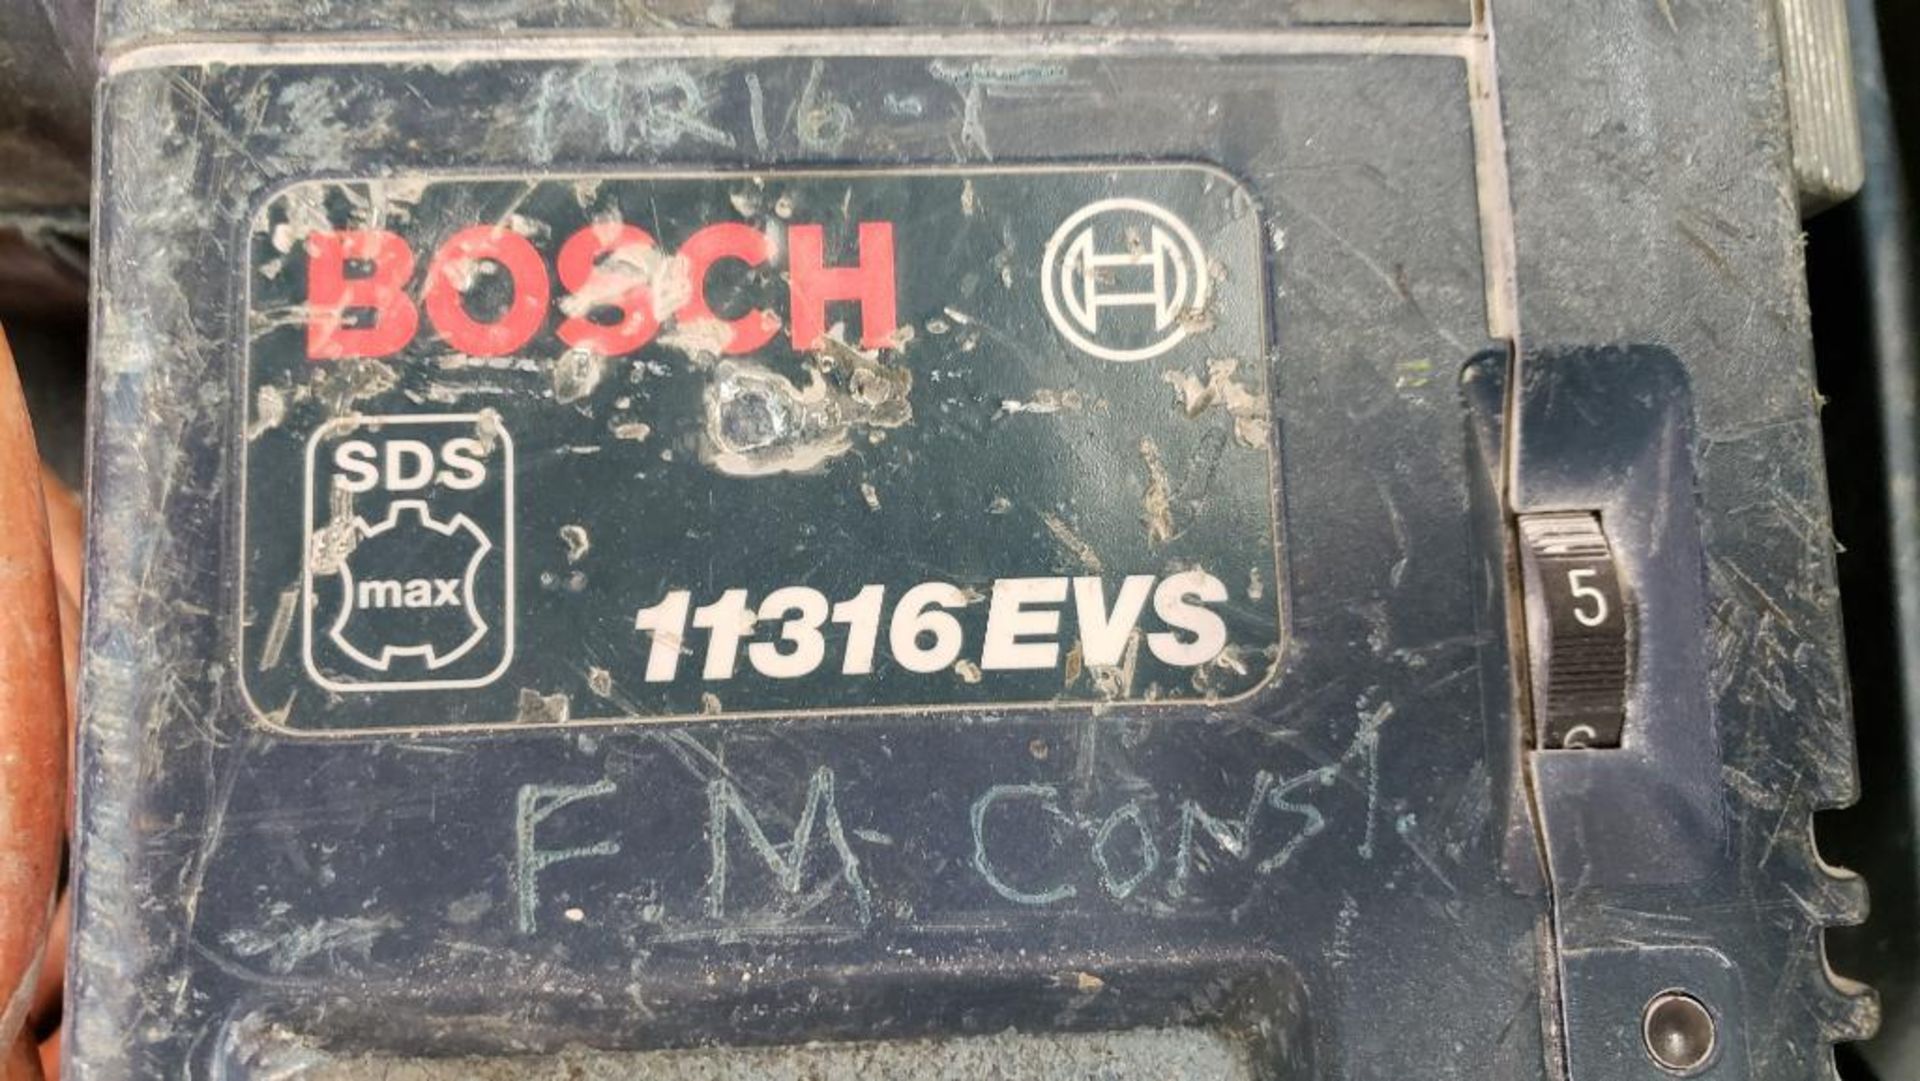 Bosch 11316EVS Boschhammer Demo hammer. - Image 3 of 8